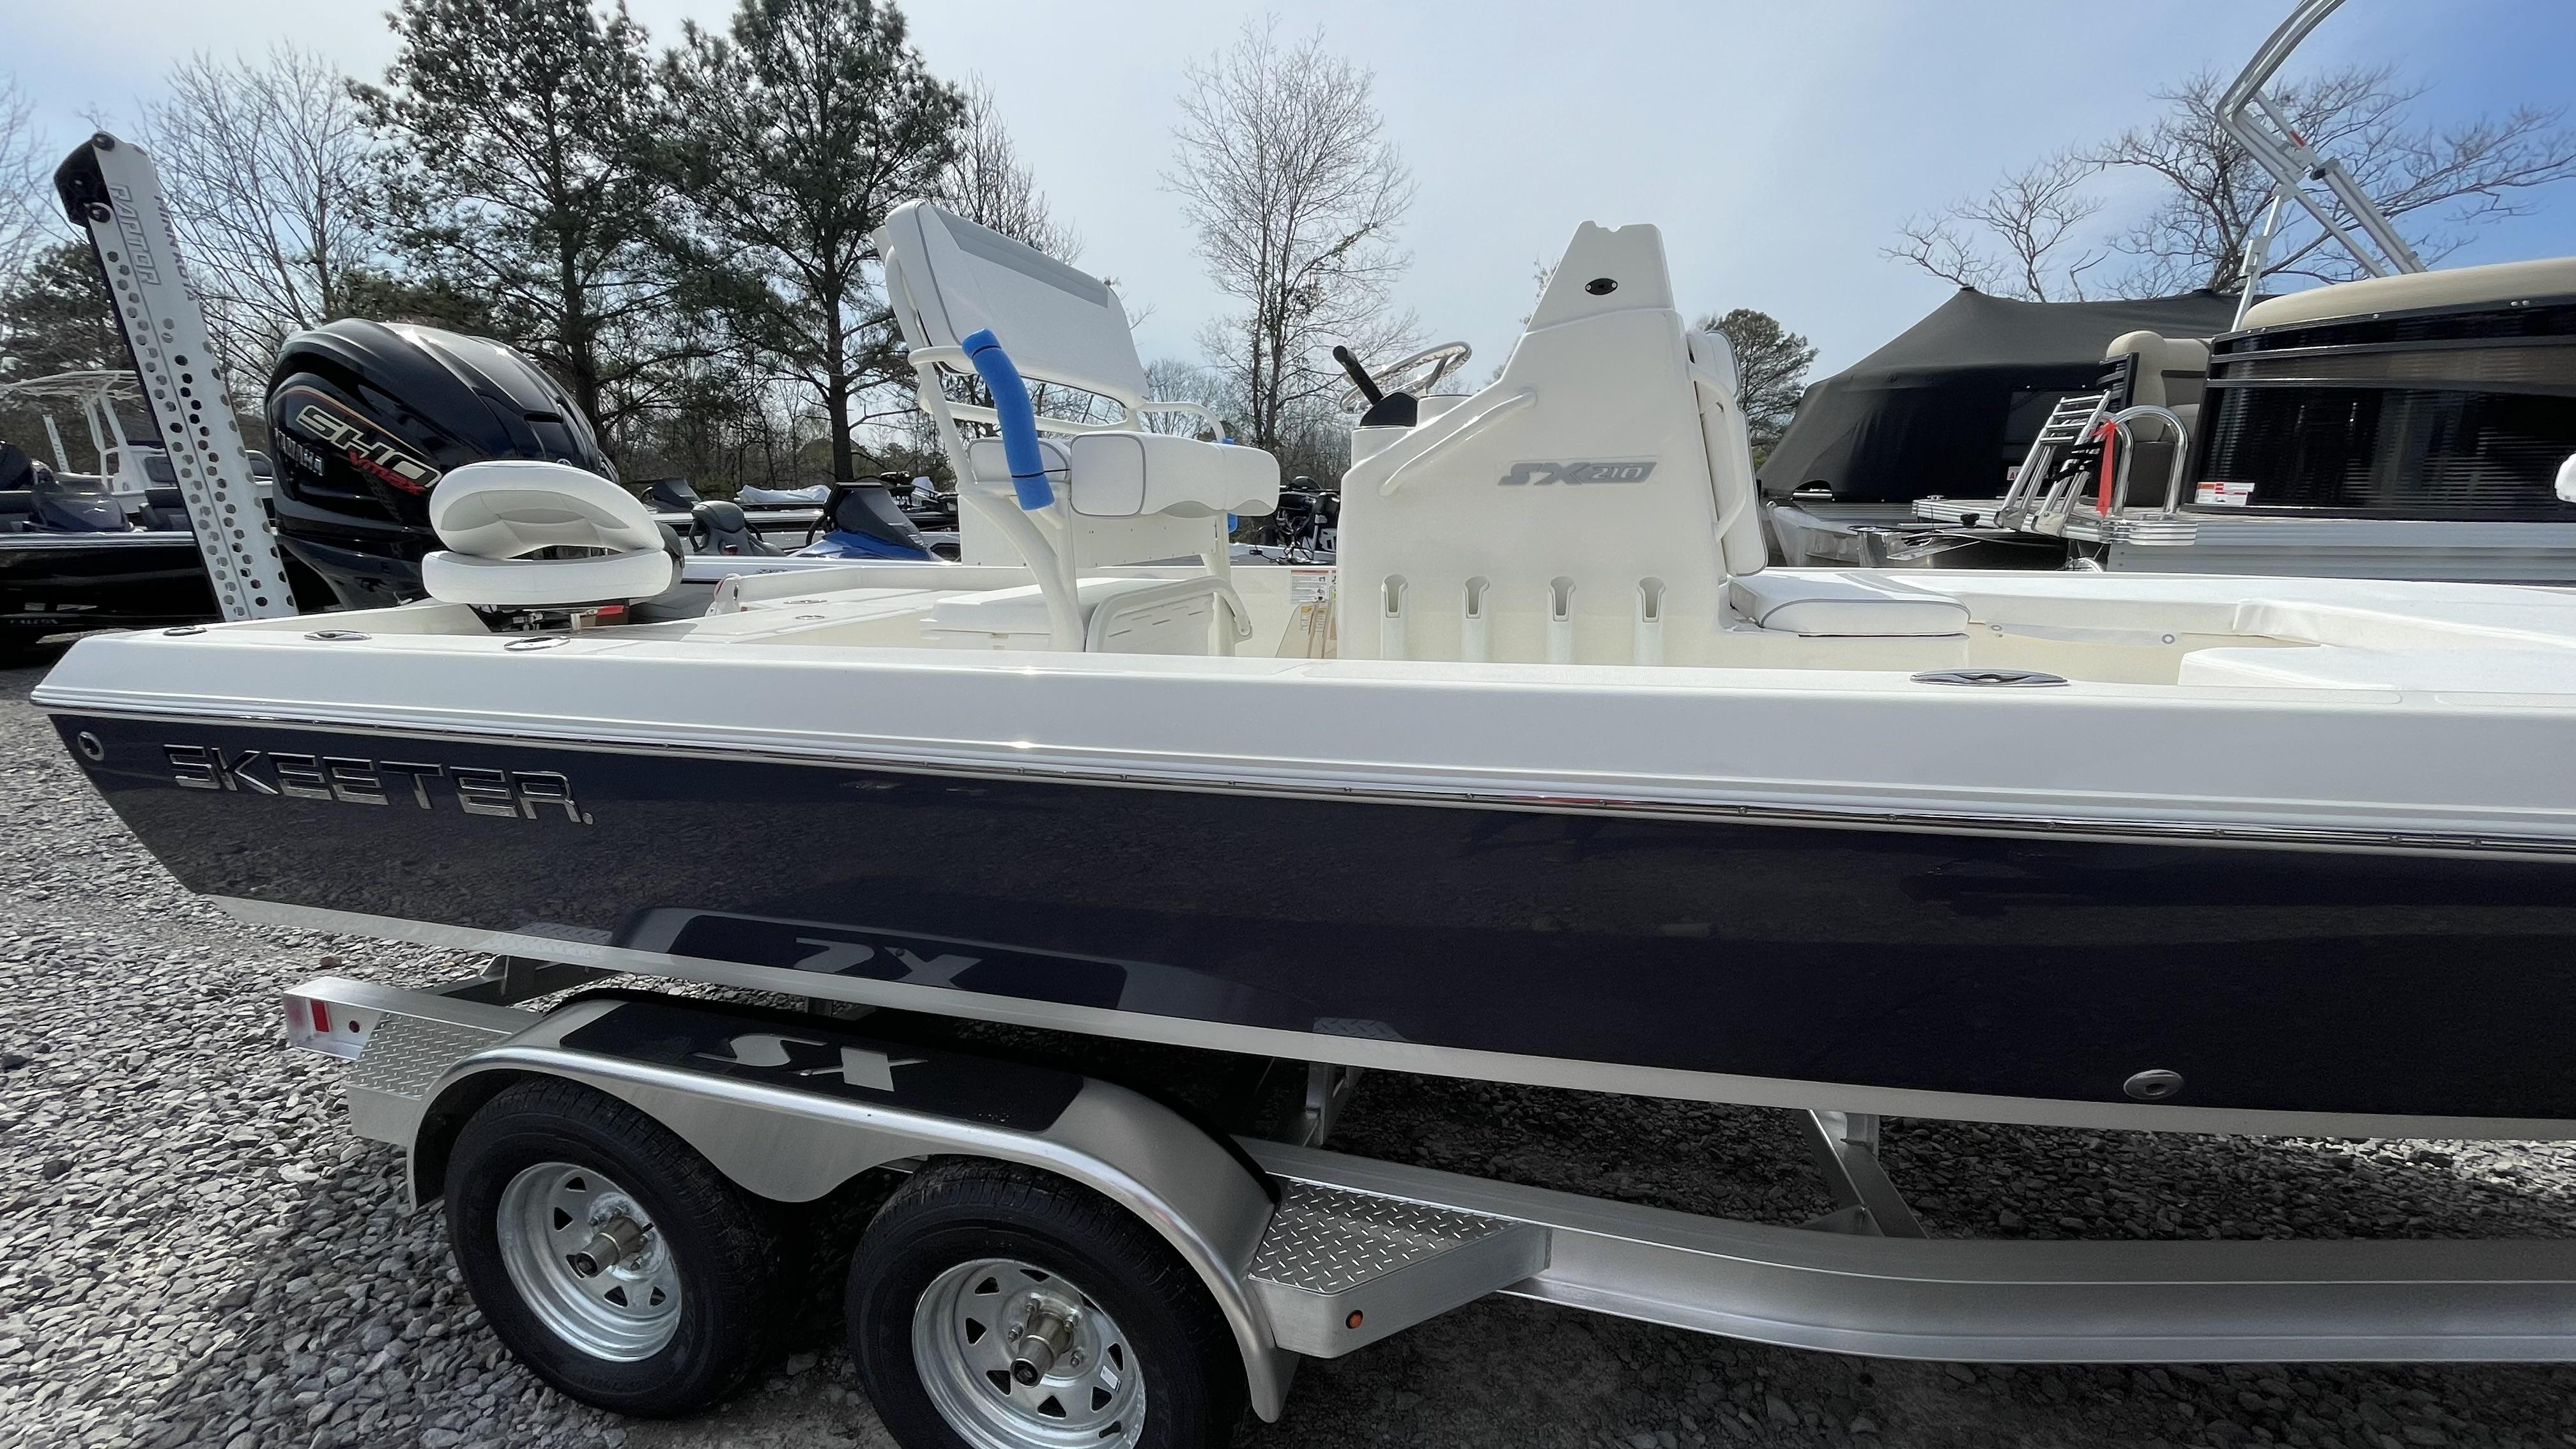 Skeeter Zx 21 boats for sale - Boat Trader